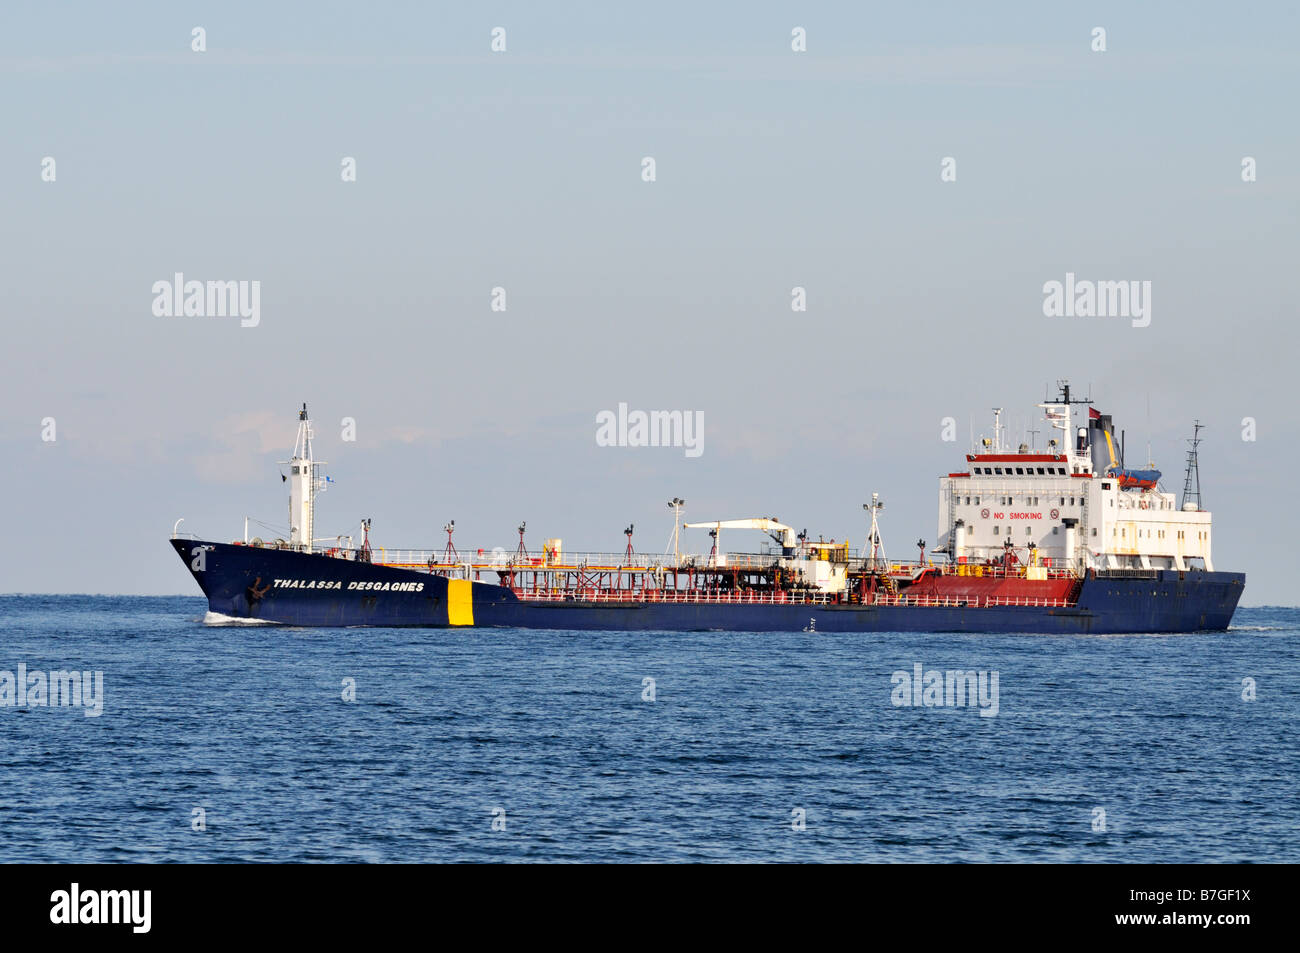 Oil tanker Thalassa Desgagnes out at Sea Stock Photo